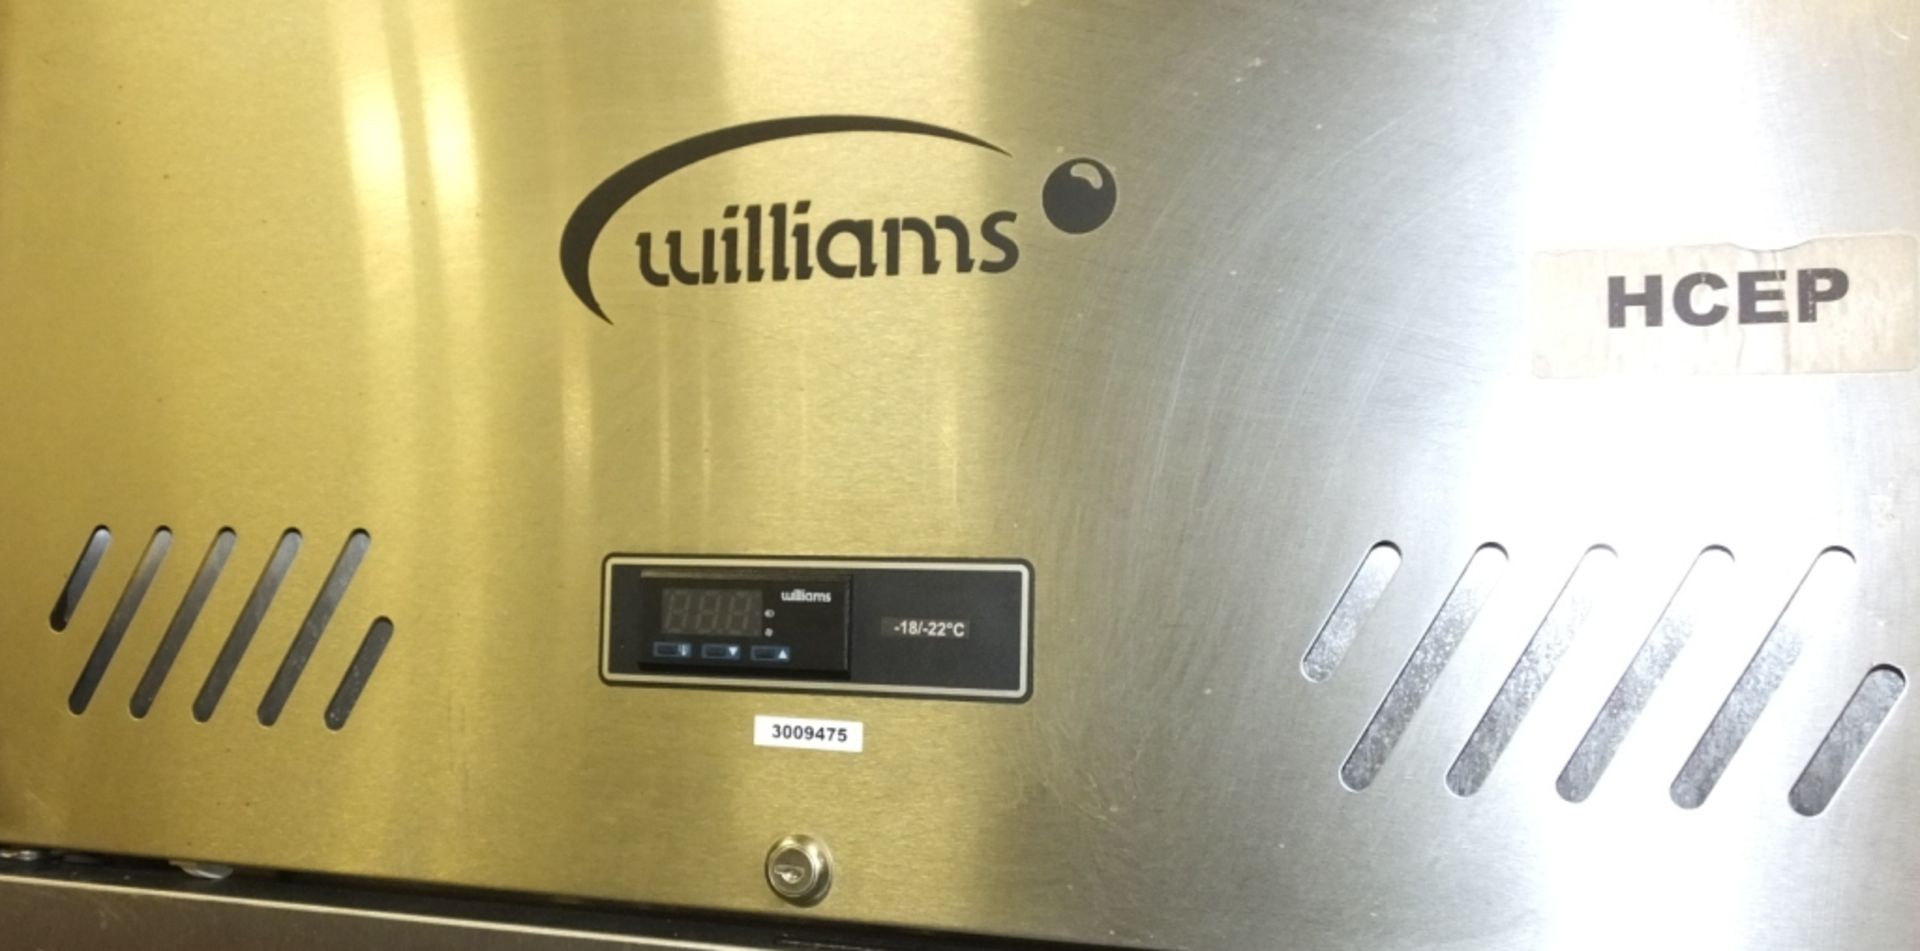 Williams LJ1SA Refrigerator L740 x W840 x H1960mm - Image 2 of 3